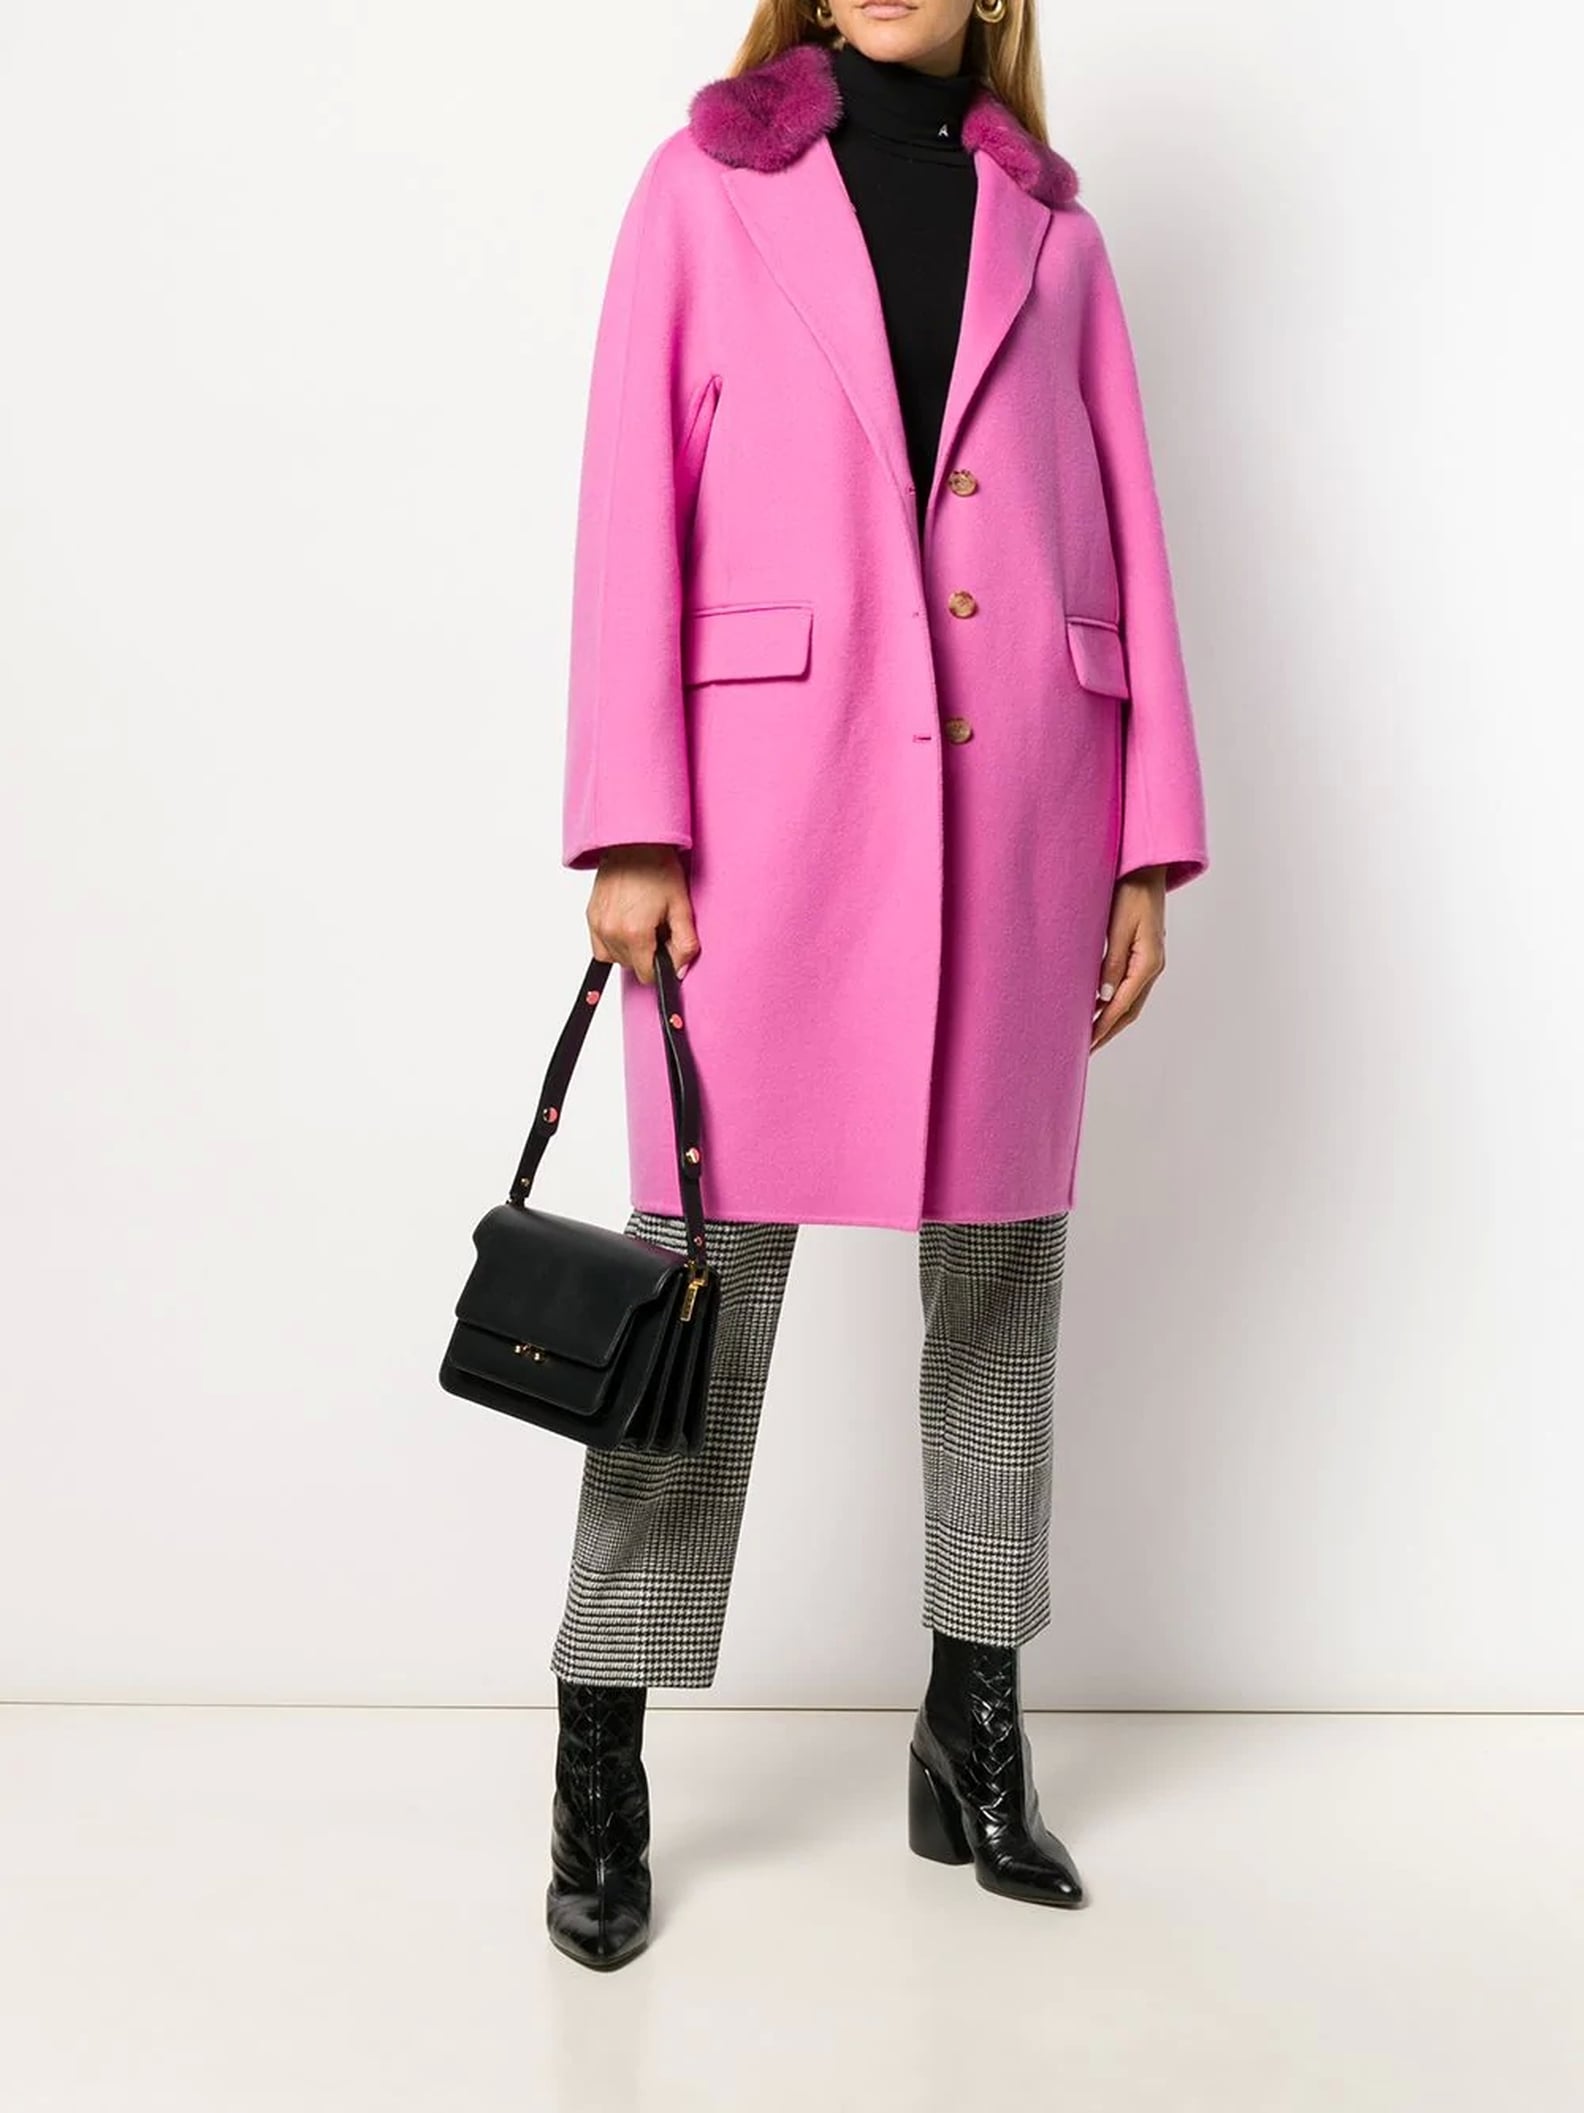 Joey King's Coral Paul & Joe Coat With a Pink Collar | POPSUGAR Fashion